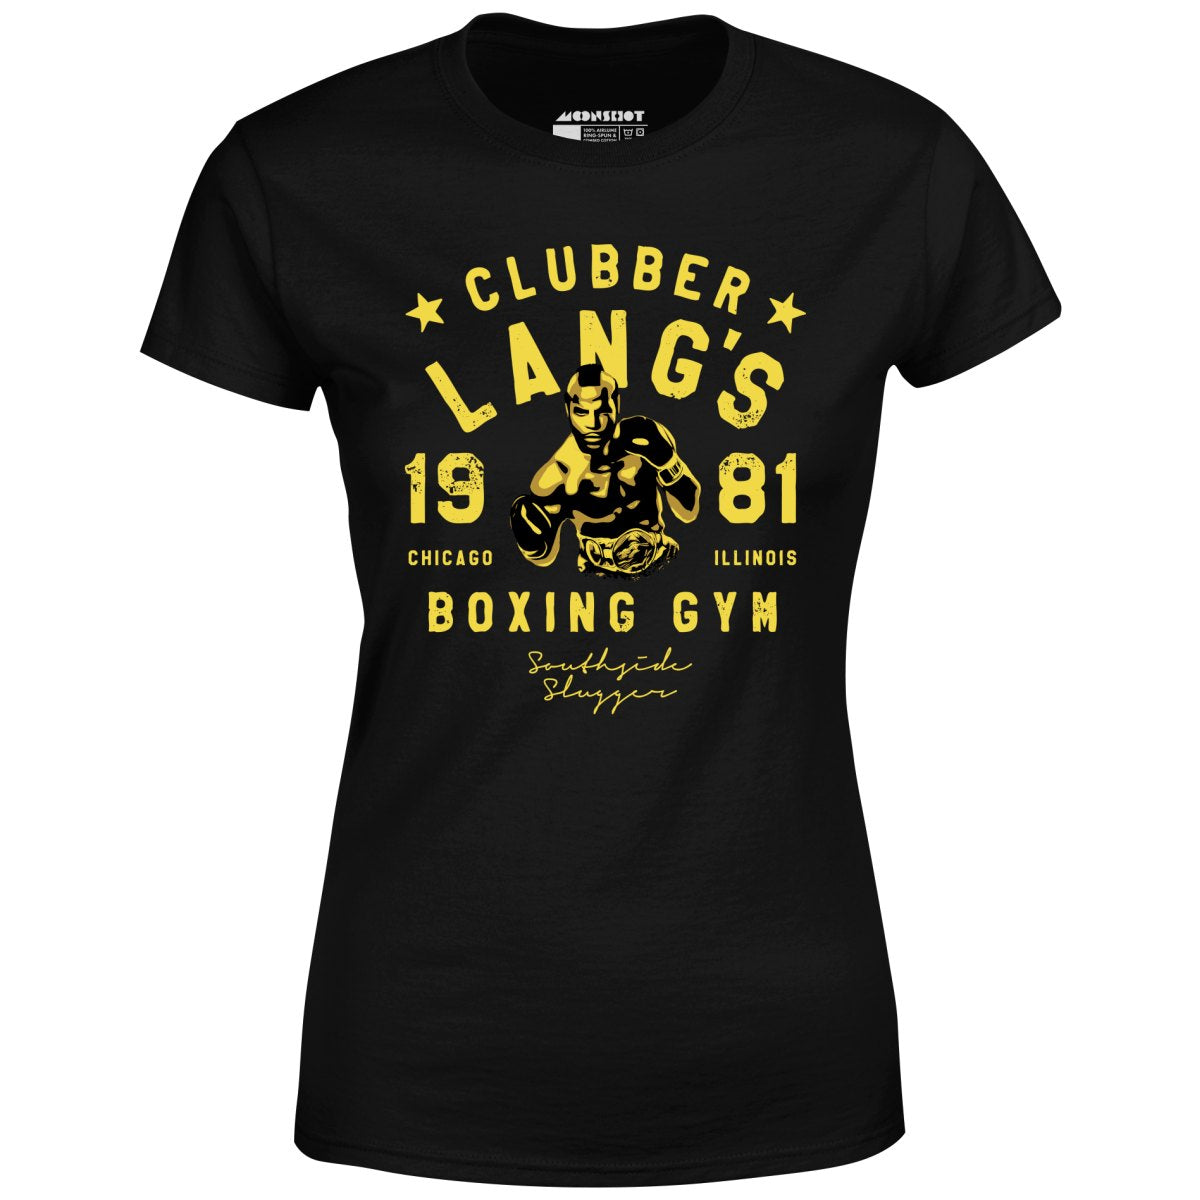 Clubber Lang's Boxing Gym - Women's T-Shirt